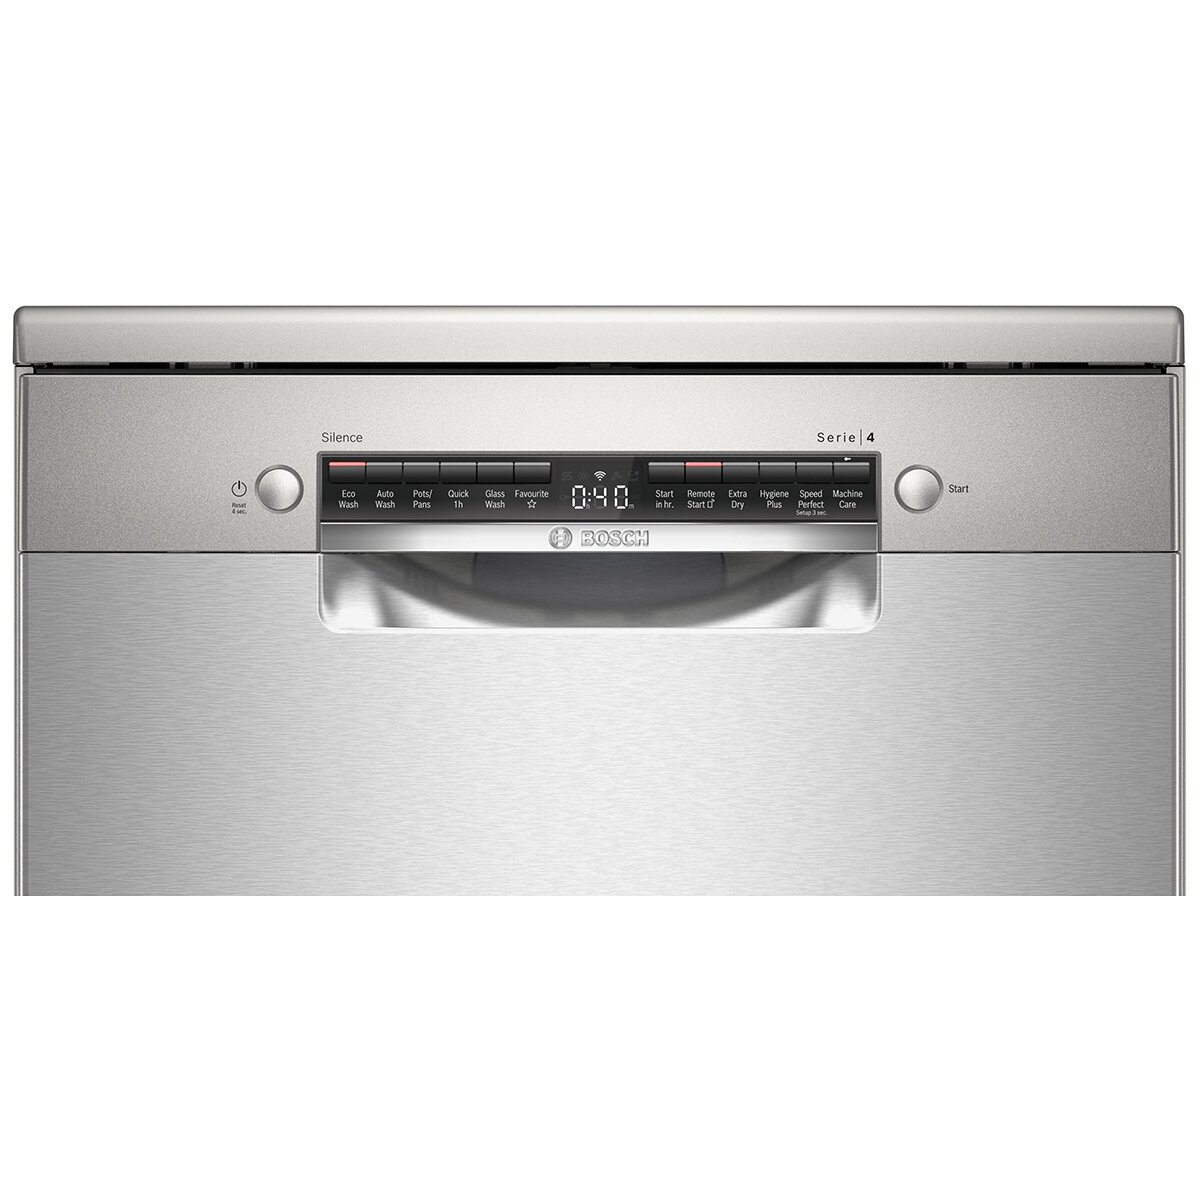 Bosch Free Standing Dishwasher 60cm SMS4HTI01A